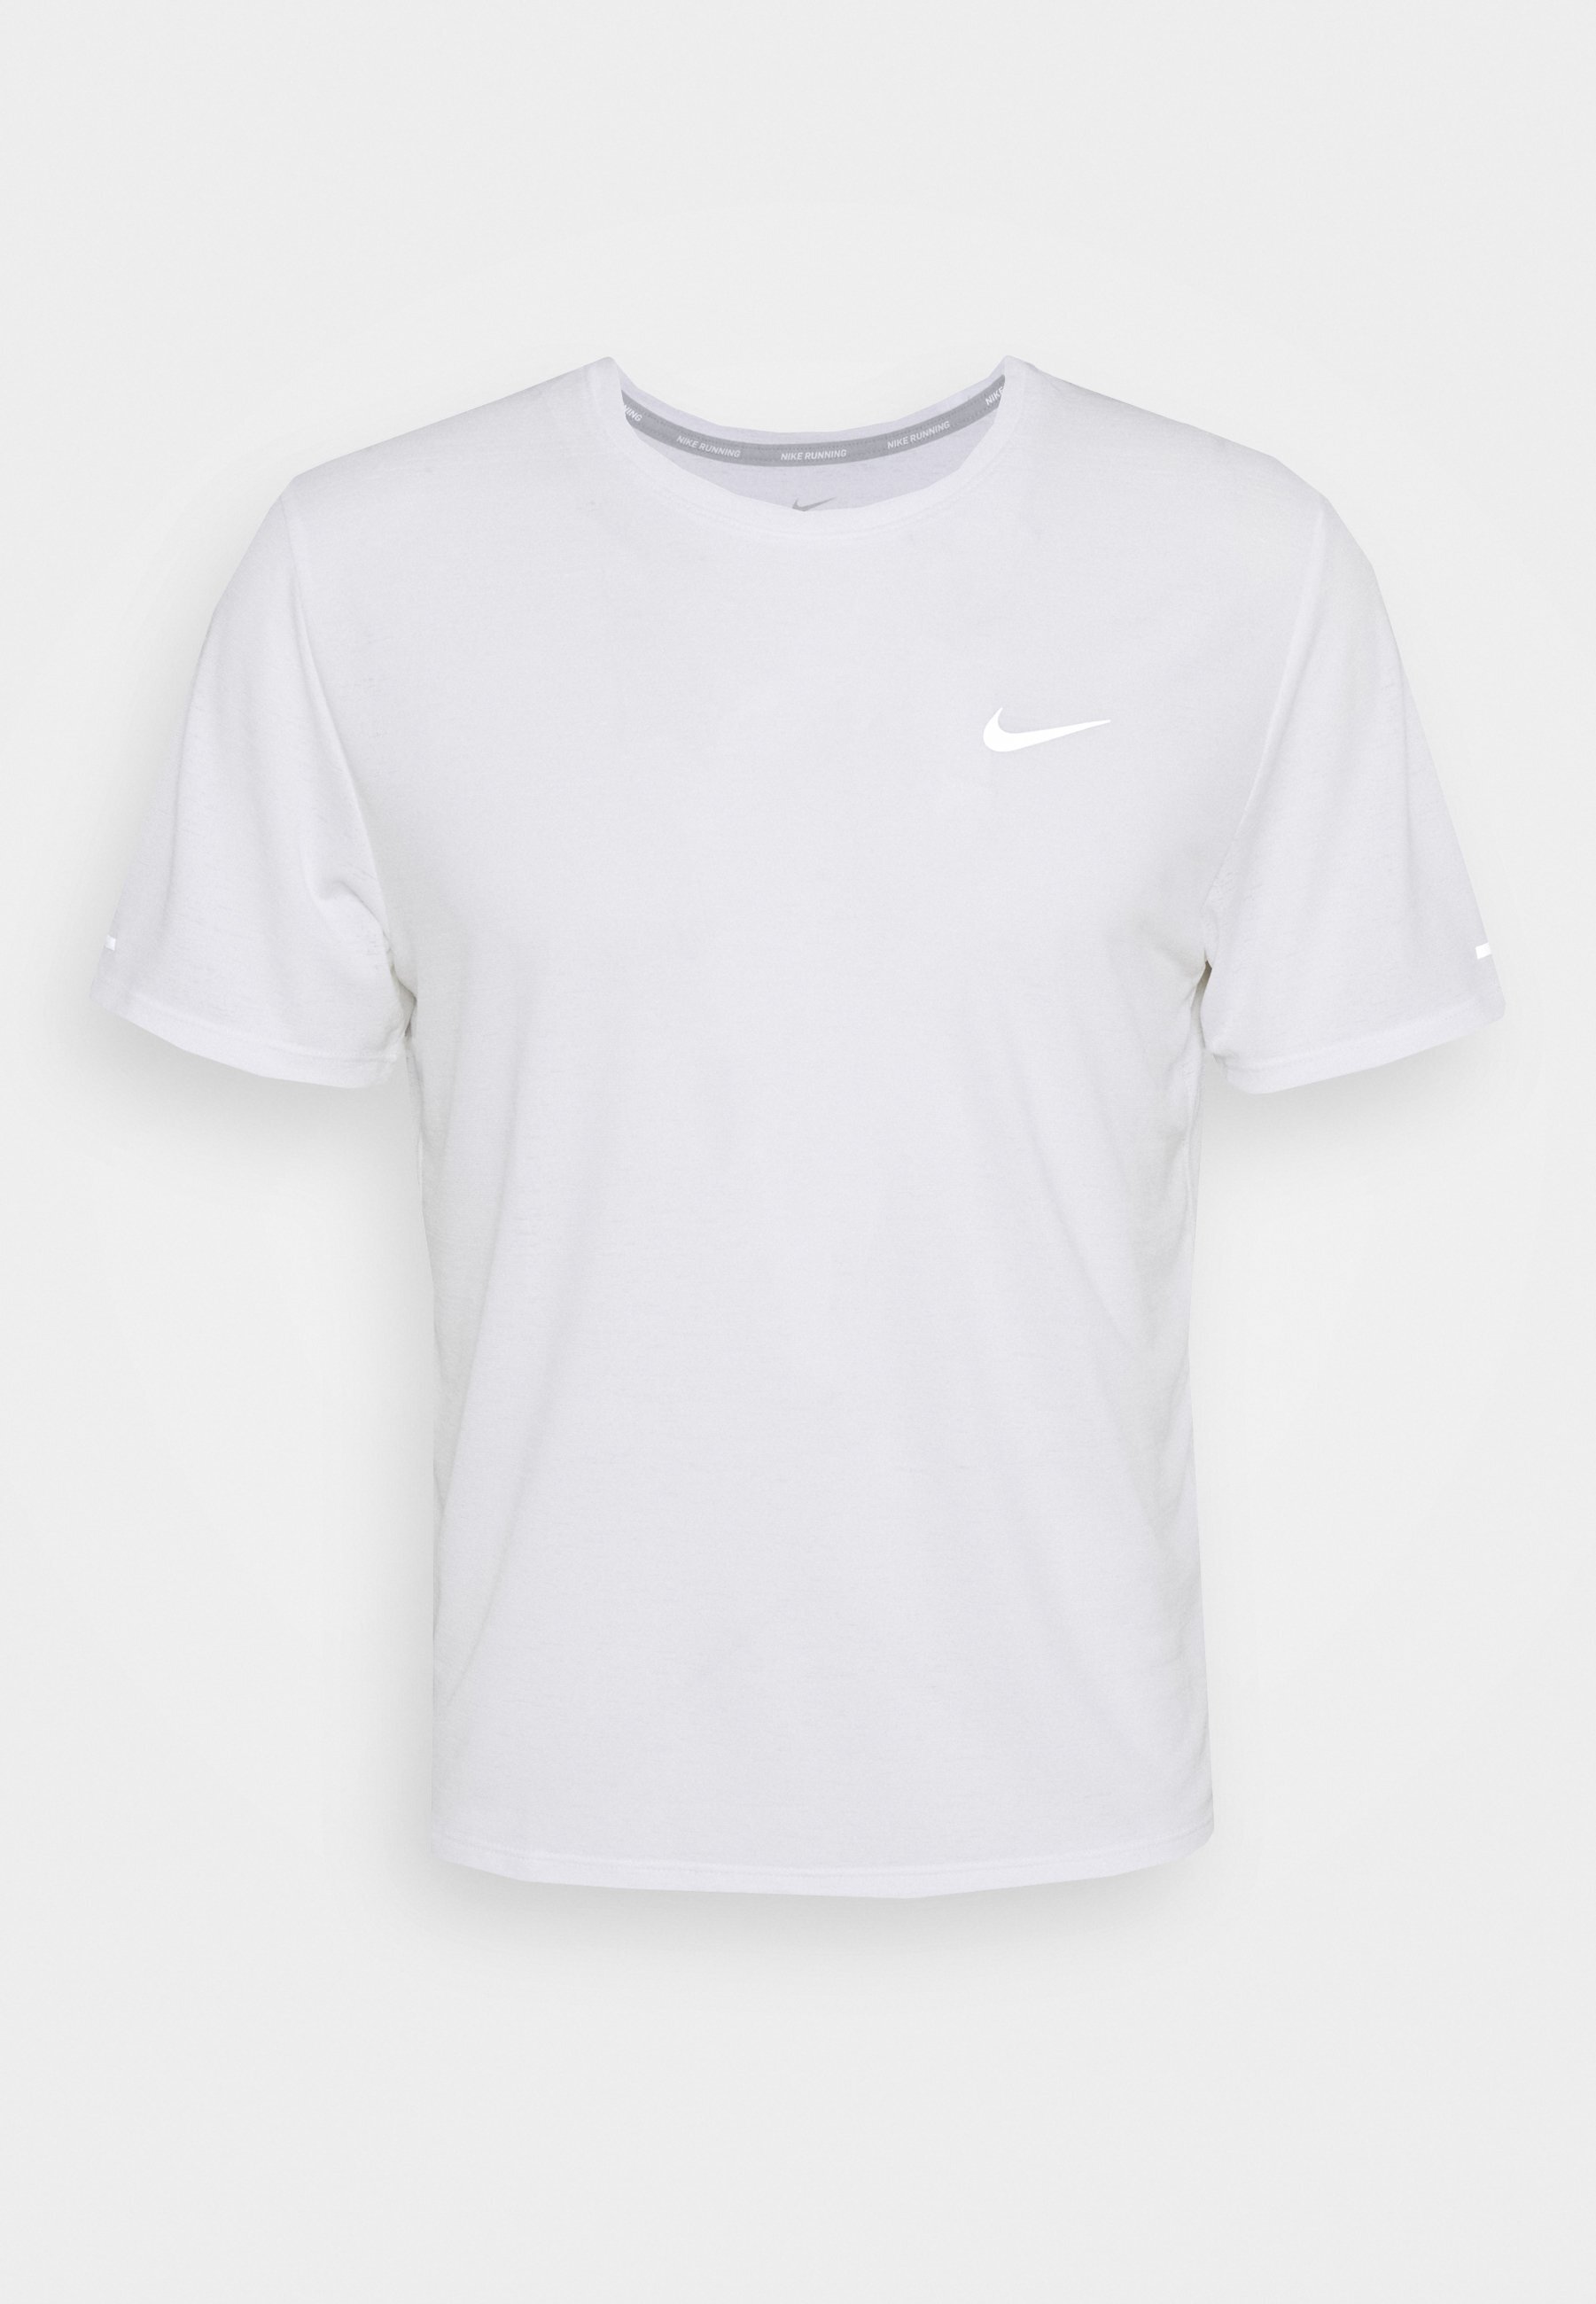 Nike Performance Mens T-shirt